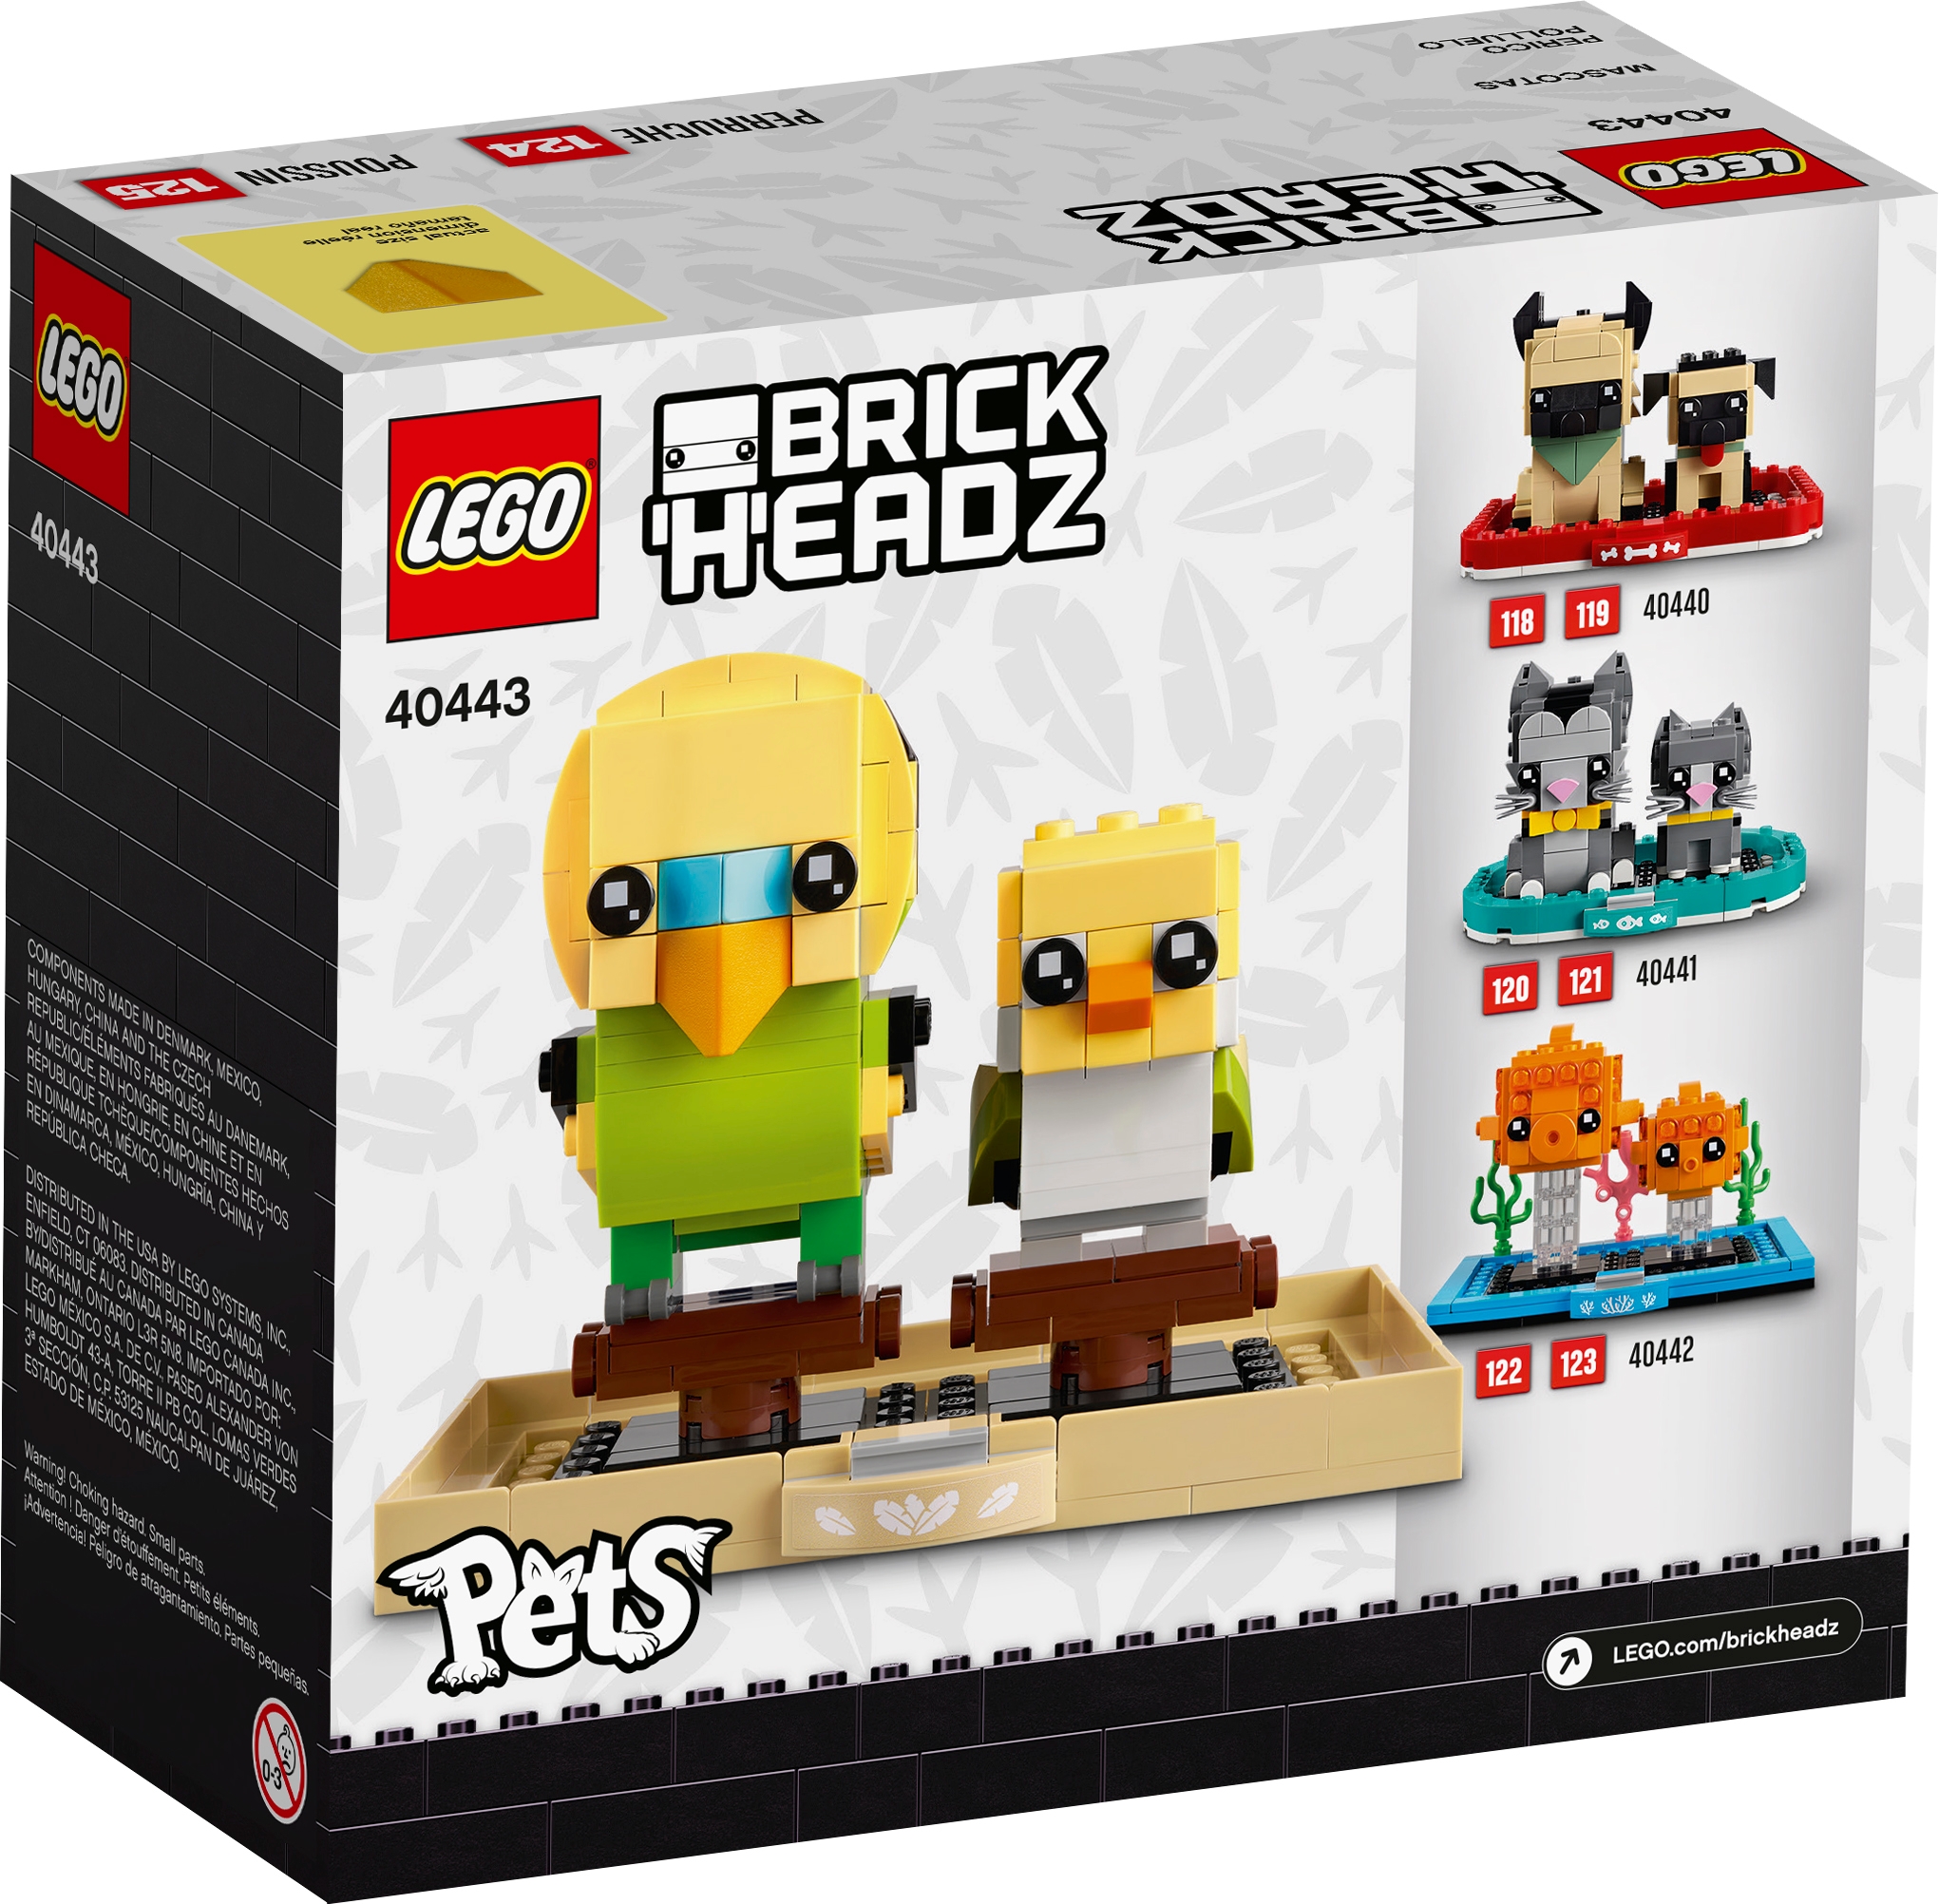 Budgie 40443 BNISB AU Brick Headz Details about   Lego Brickheadz Pets Birds 